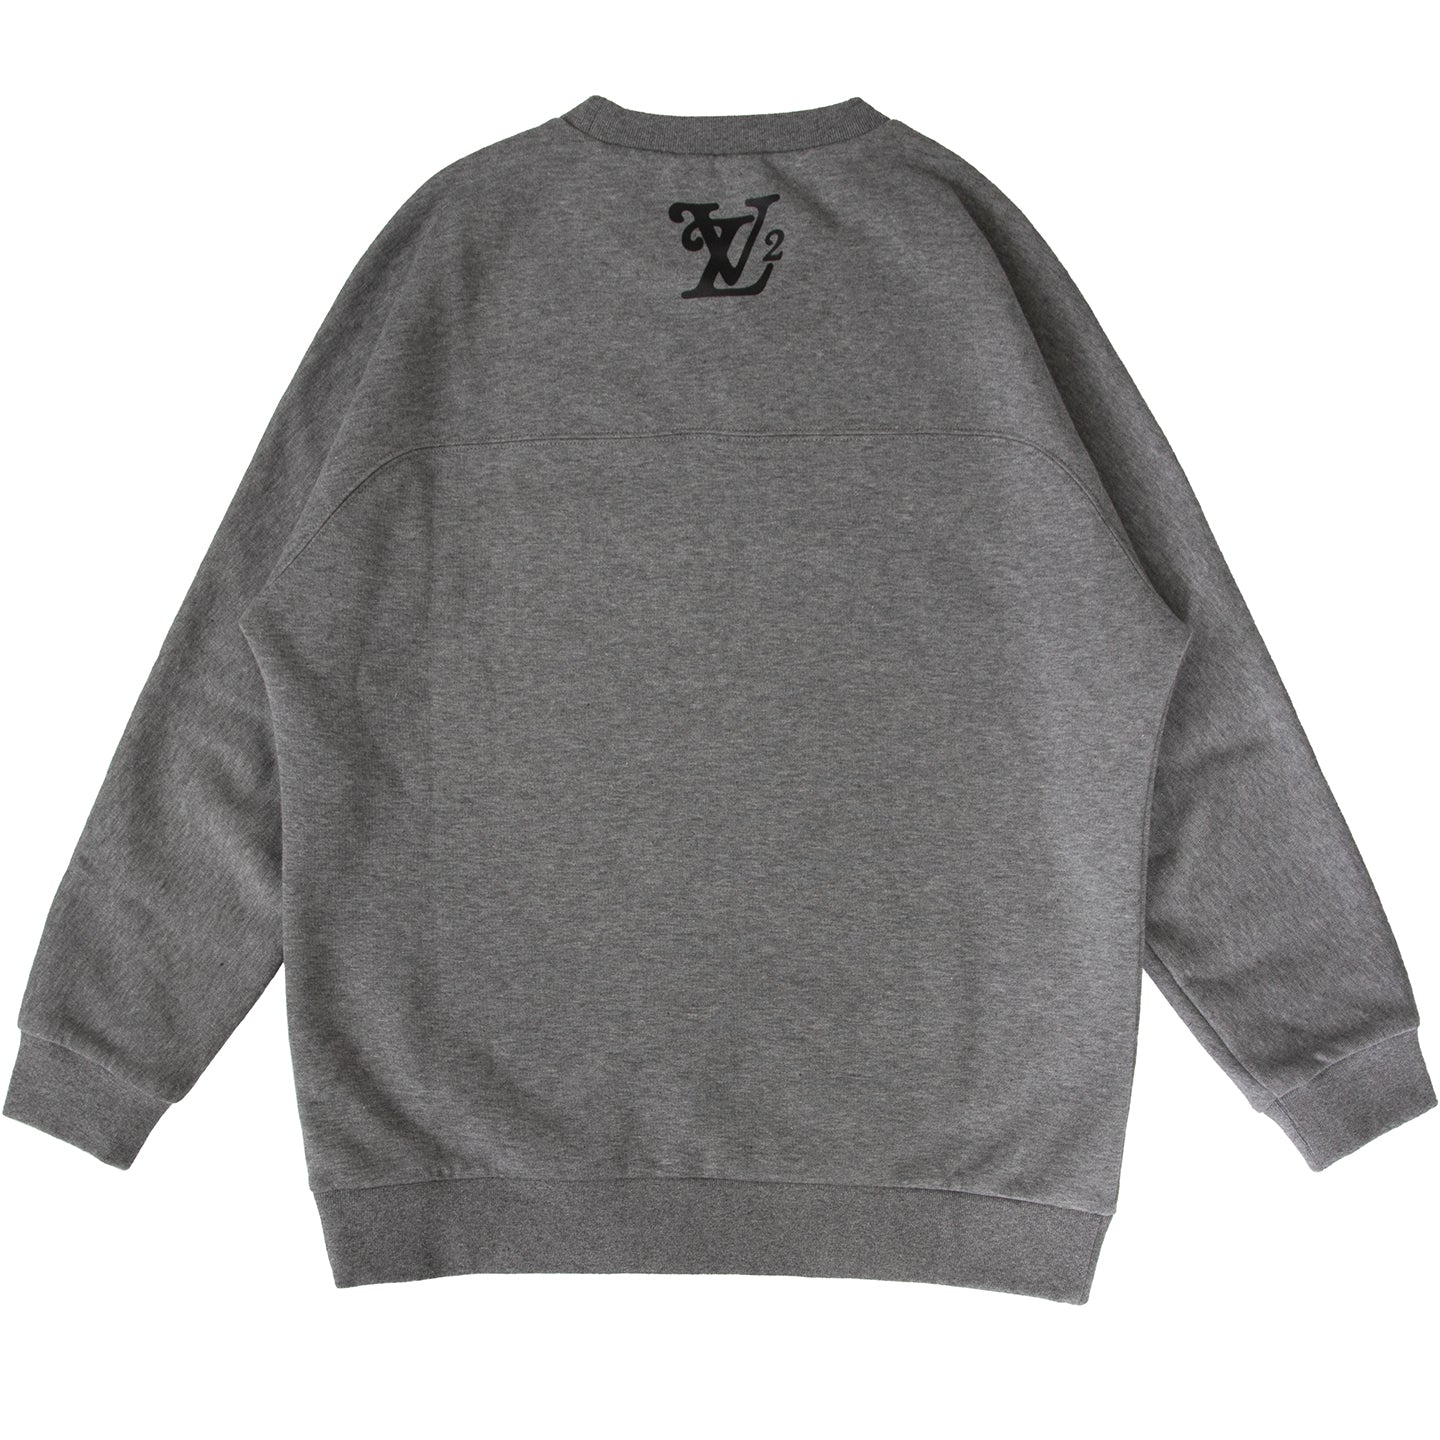 Louis Vuitton x Nigo Authenticated T-Shirt